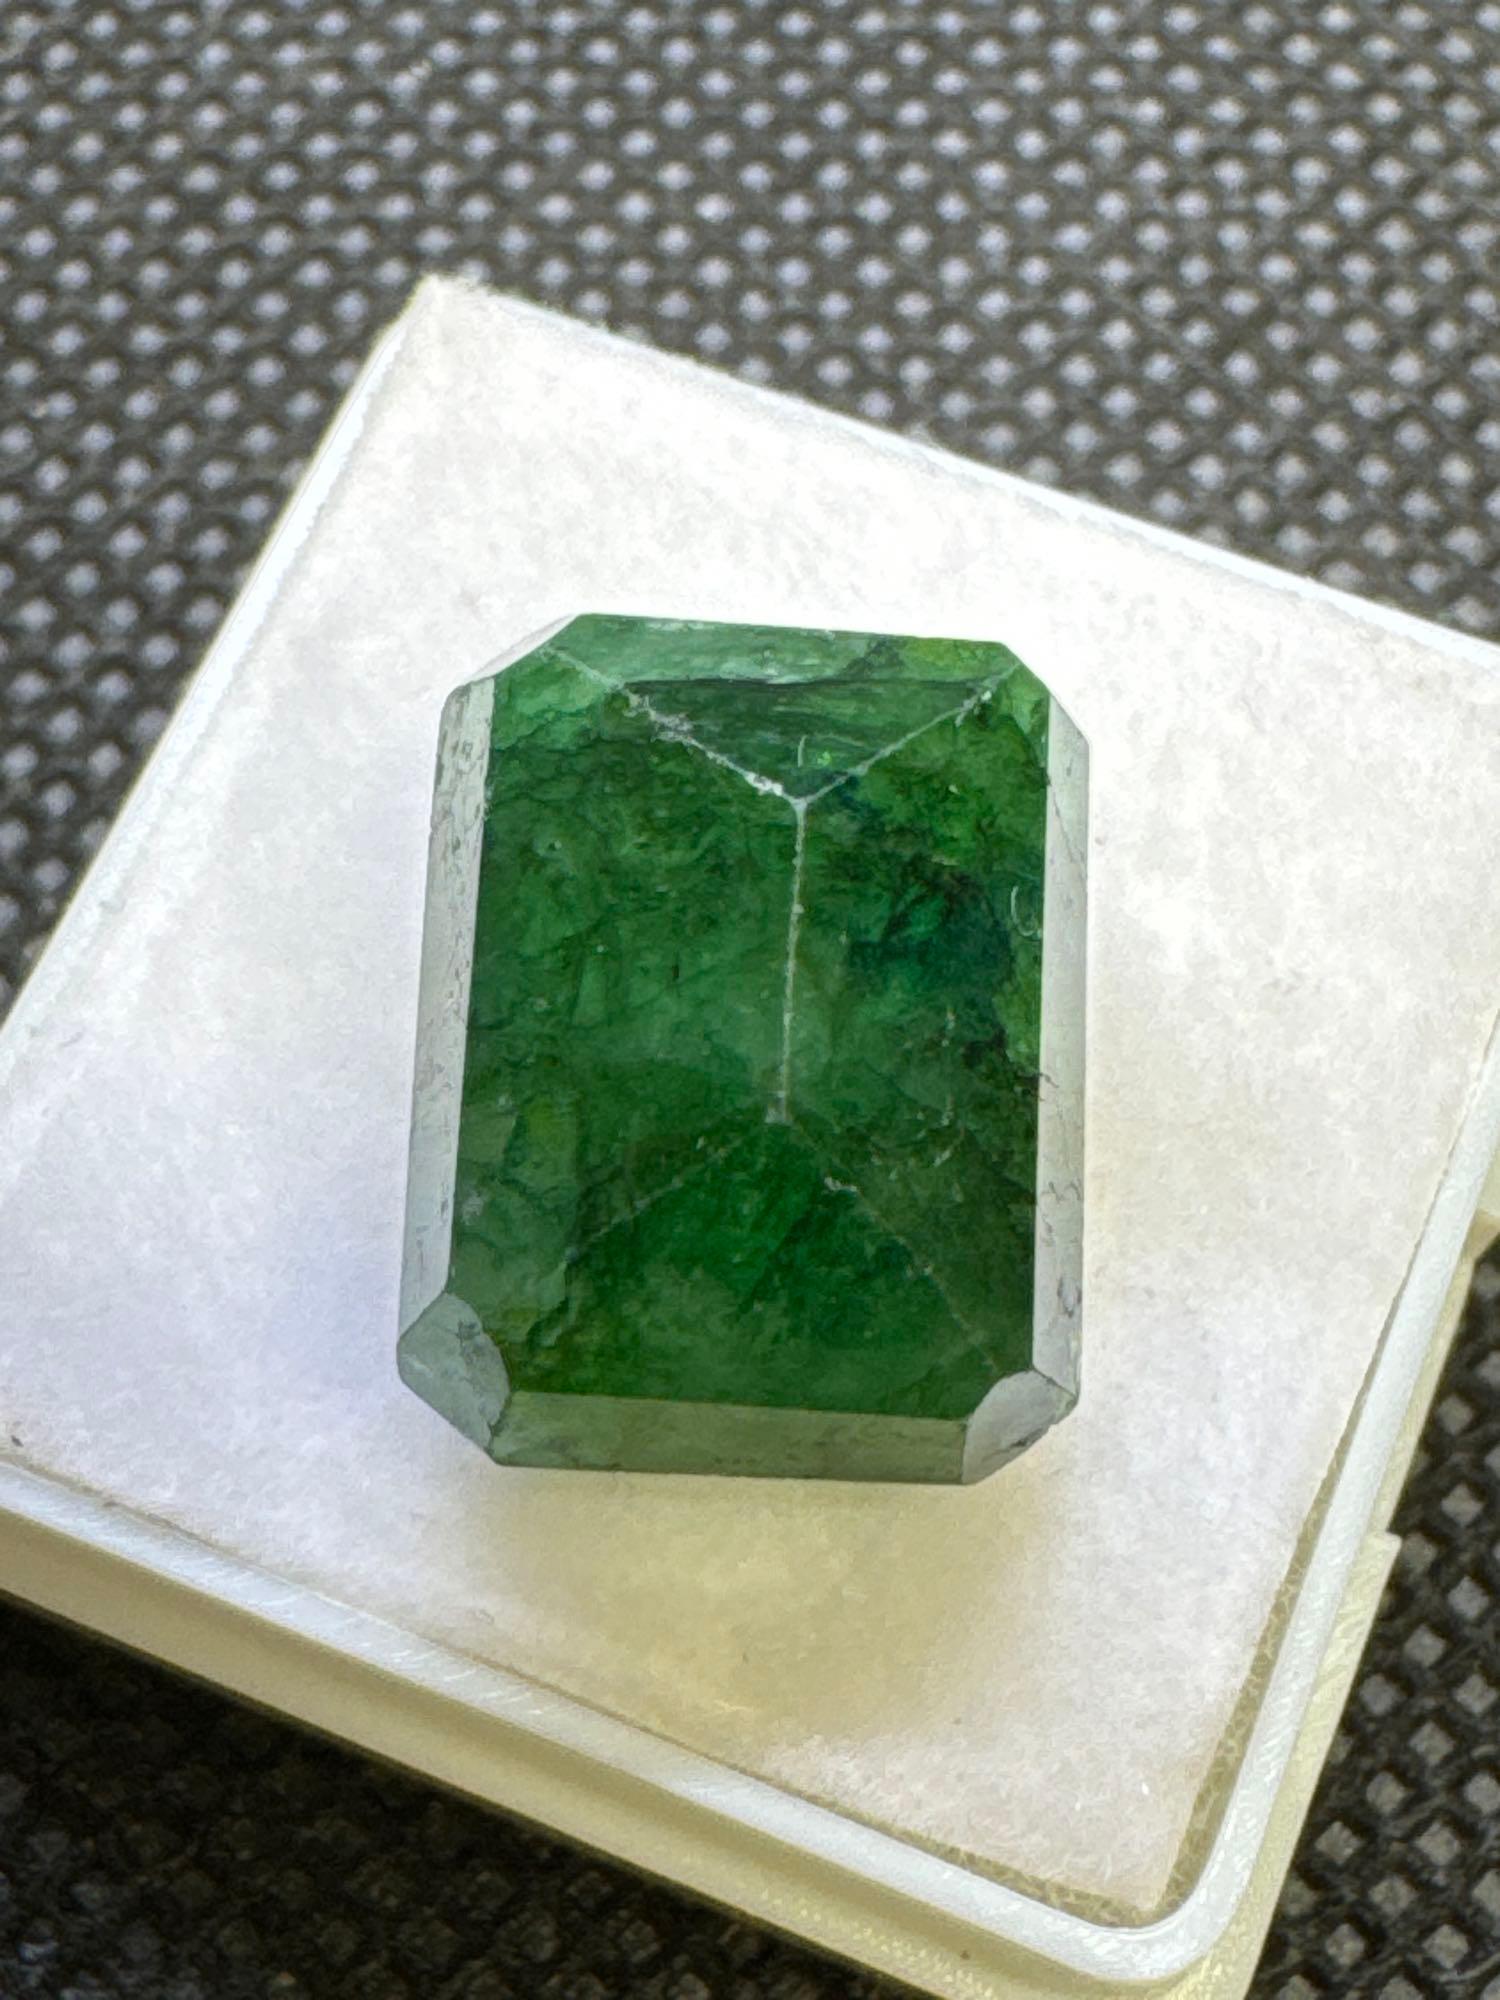 Emerald Cut Green Emerald Gemstone 15.55ct